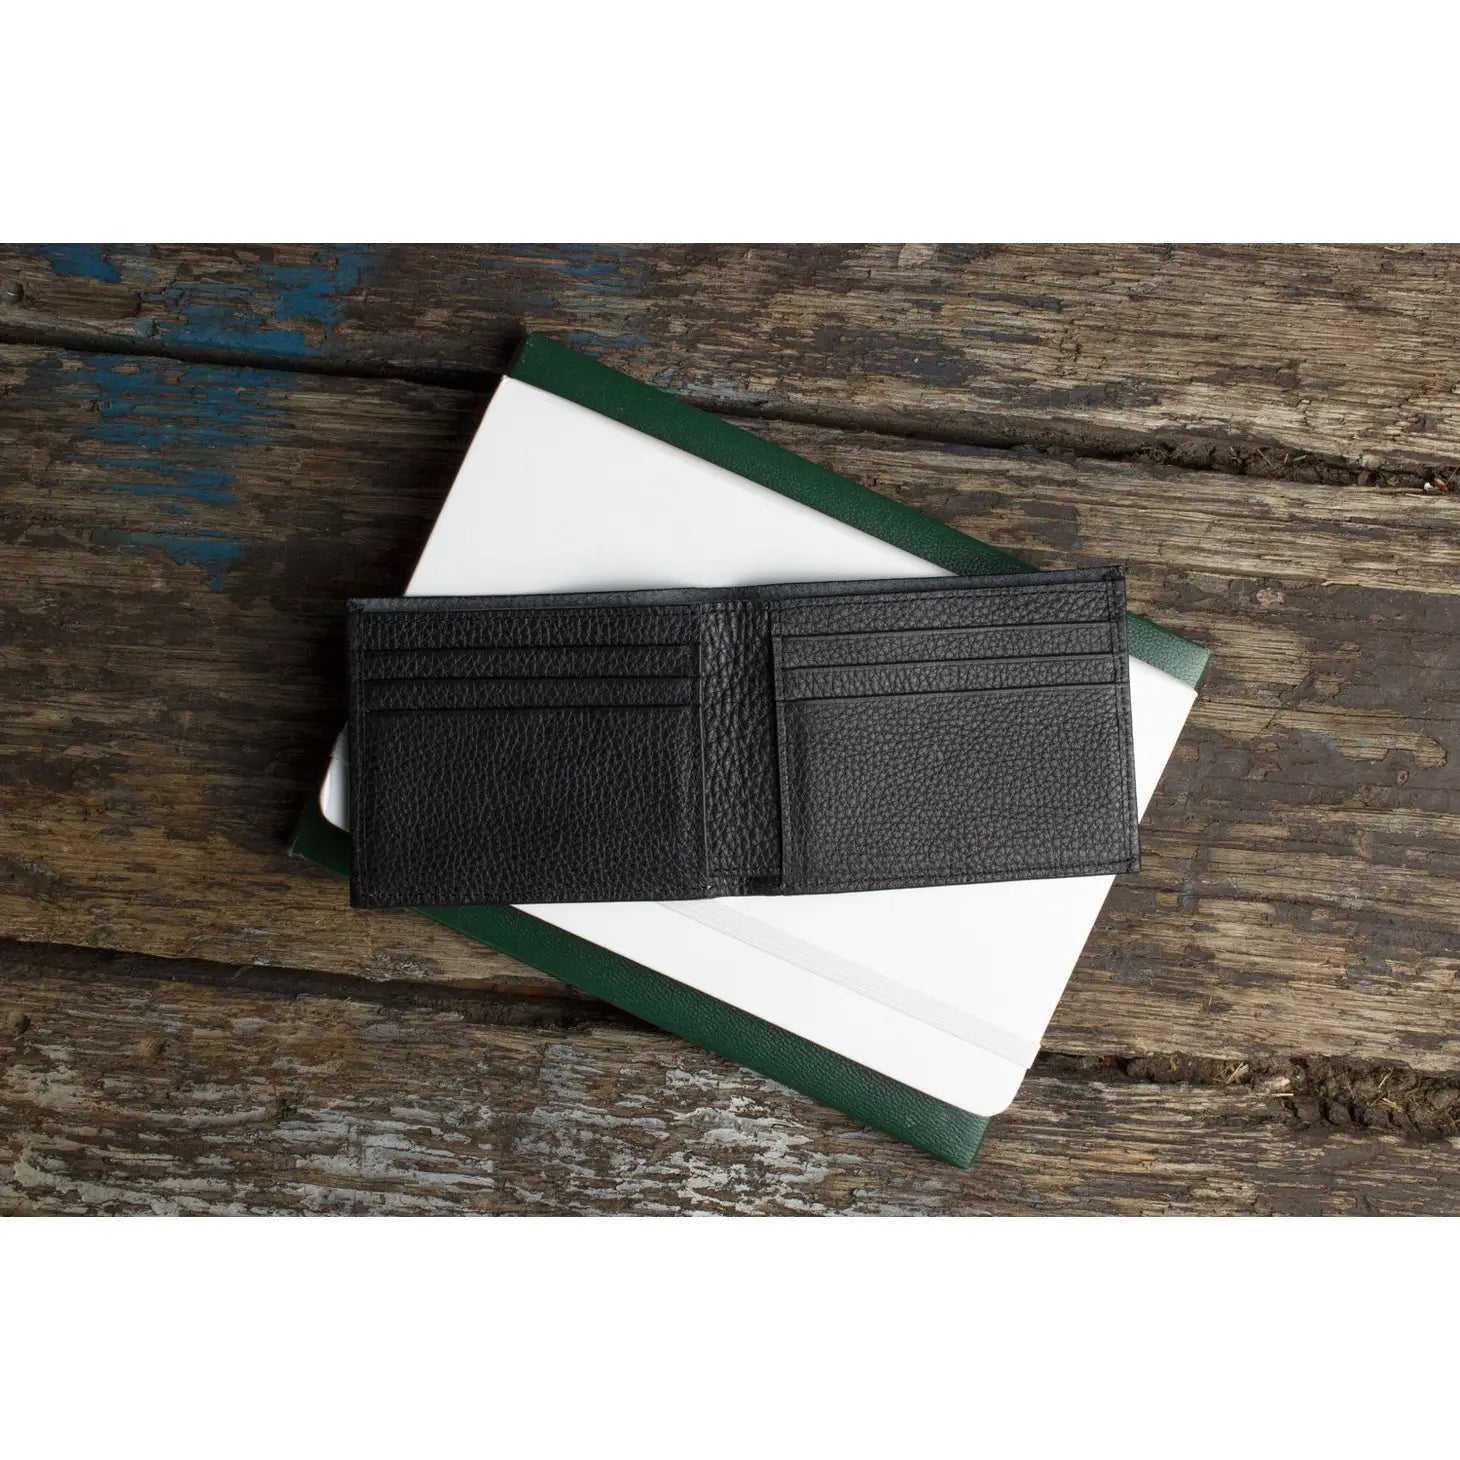 Kiko Black Classic Leather Wallet #122